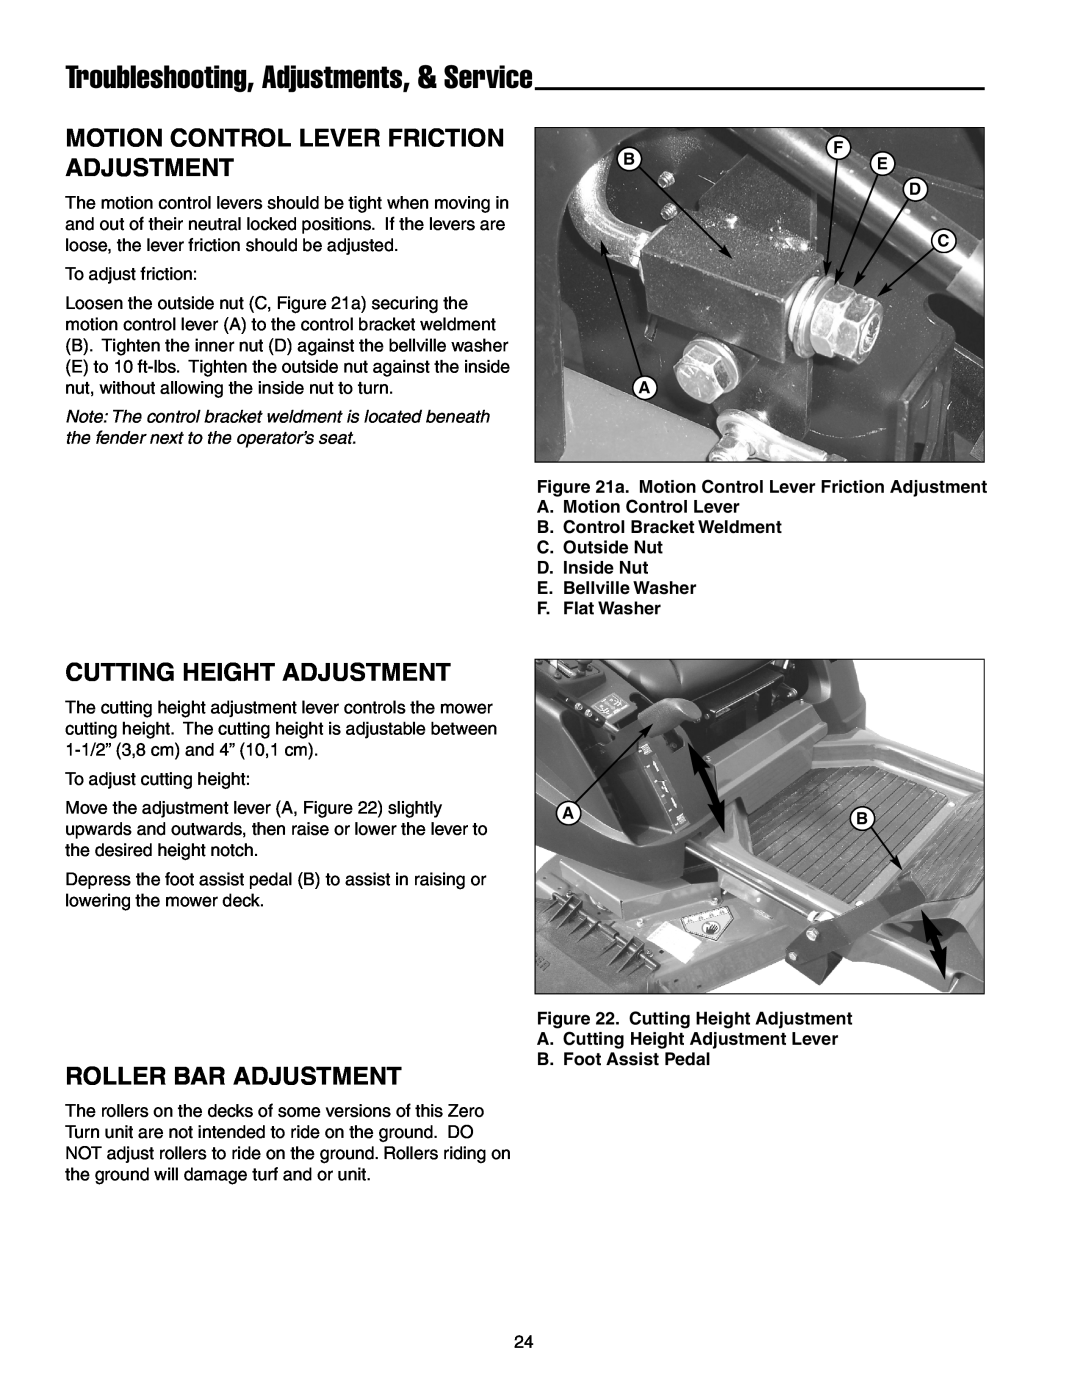 Simplicity 250 Z manual Motion Control Lever Friction Adjustment, Cutting Height Adjustment, Roller Bar Adjustment 